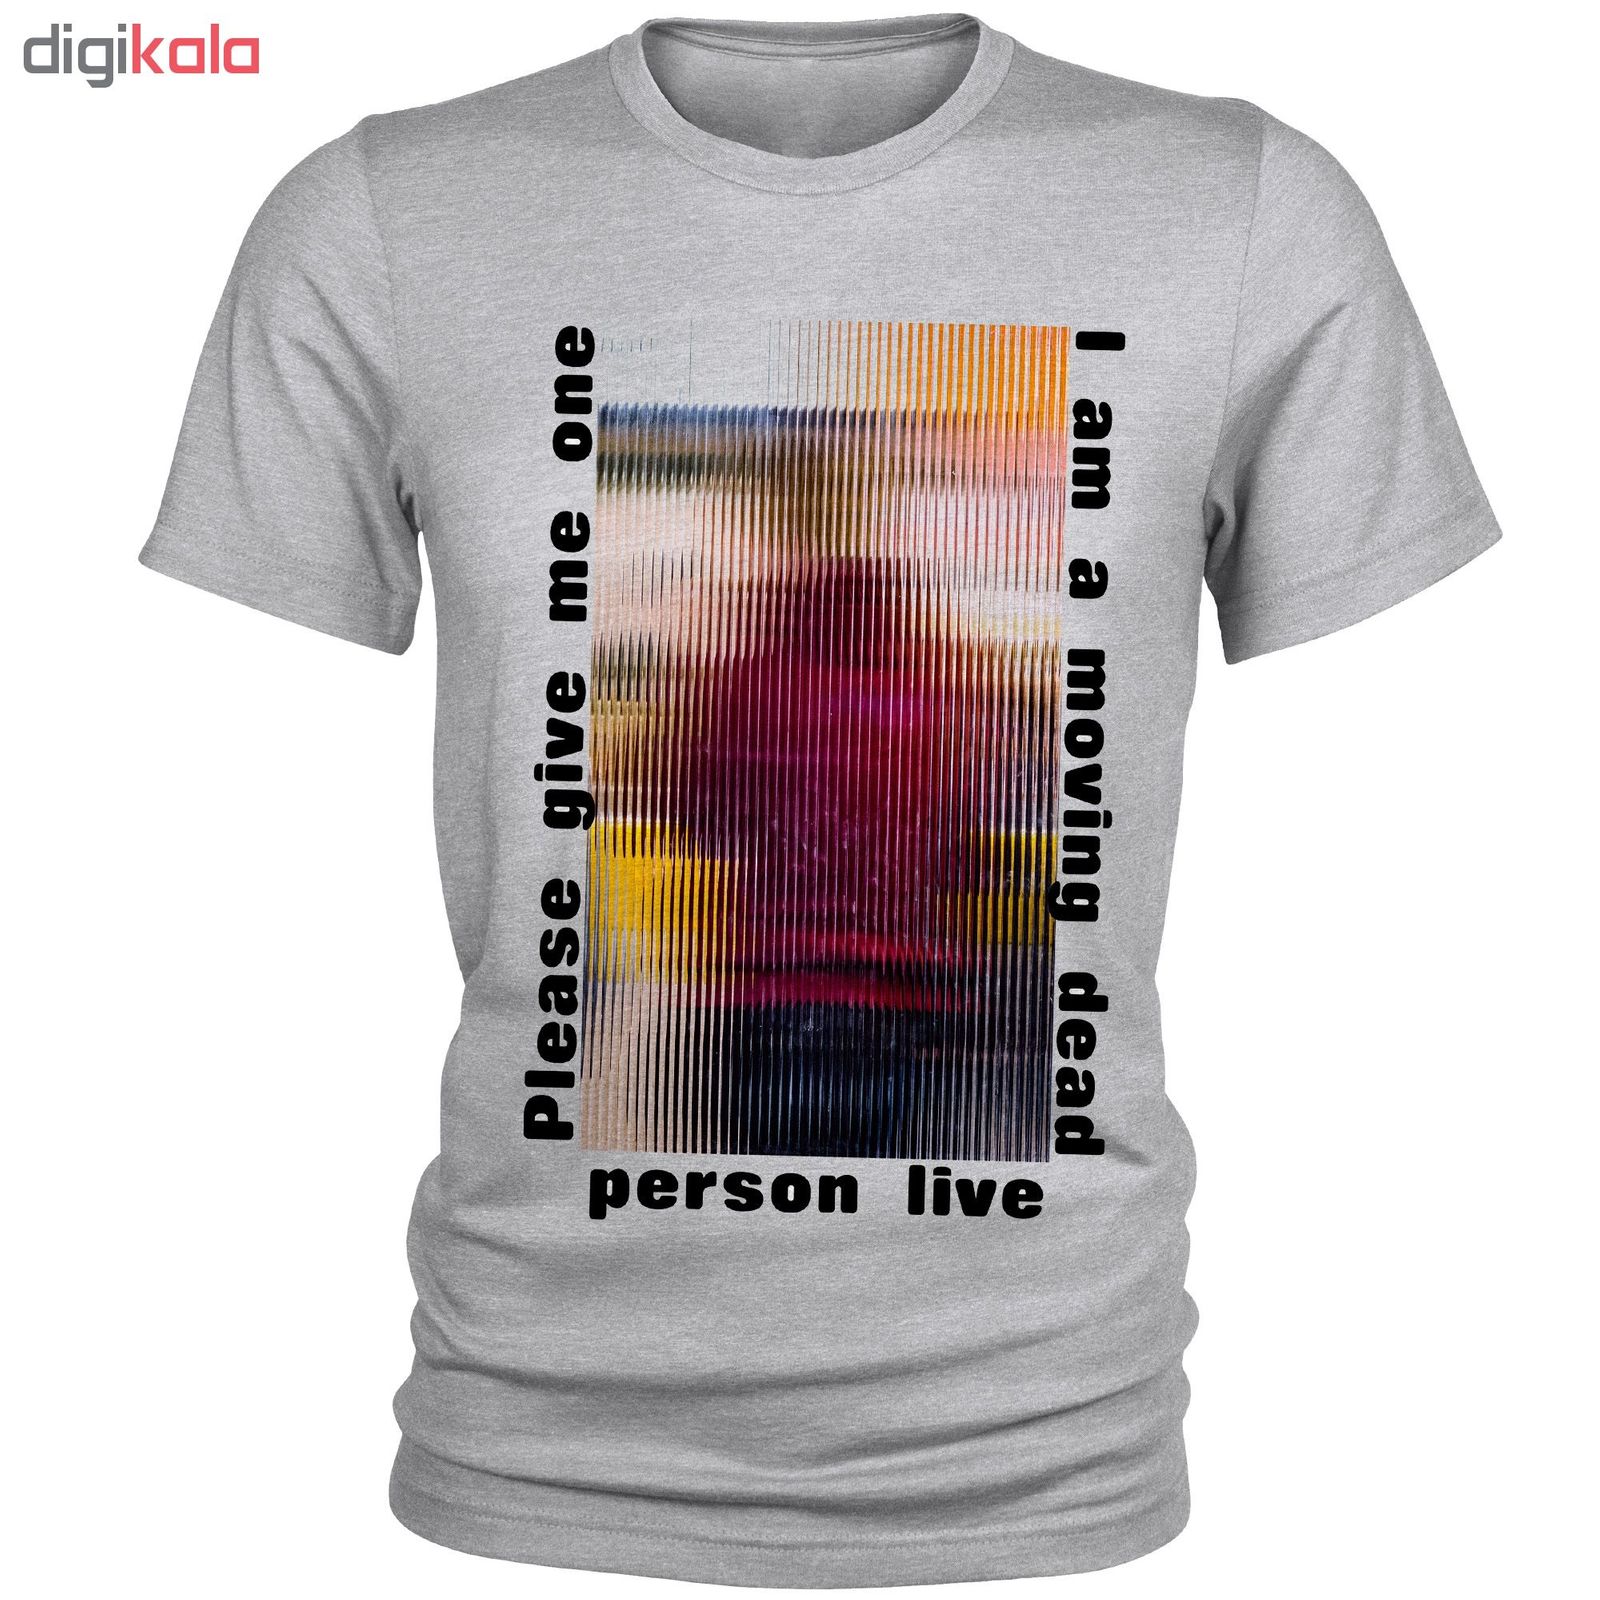 تی شرت مردانه طرح Person Live کد A059 